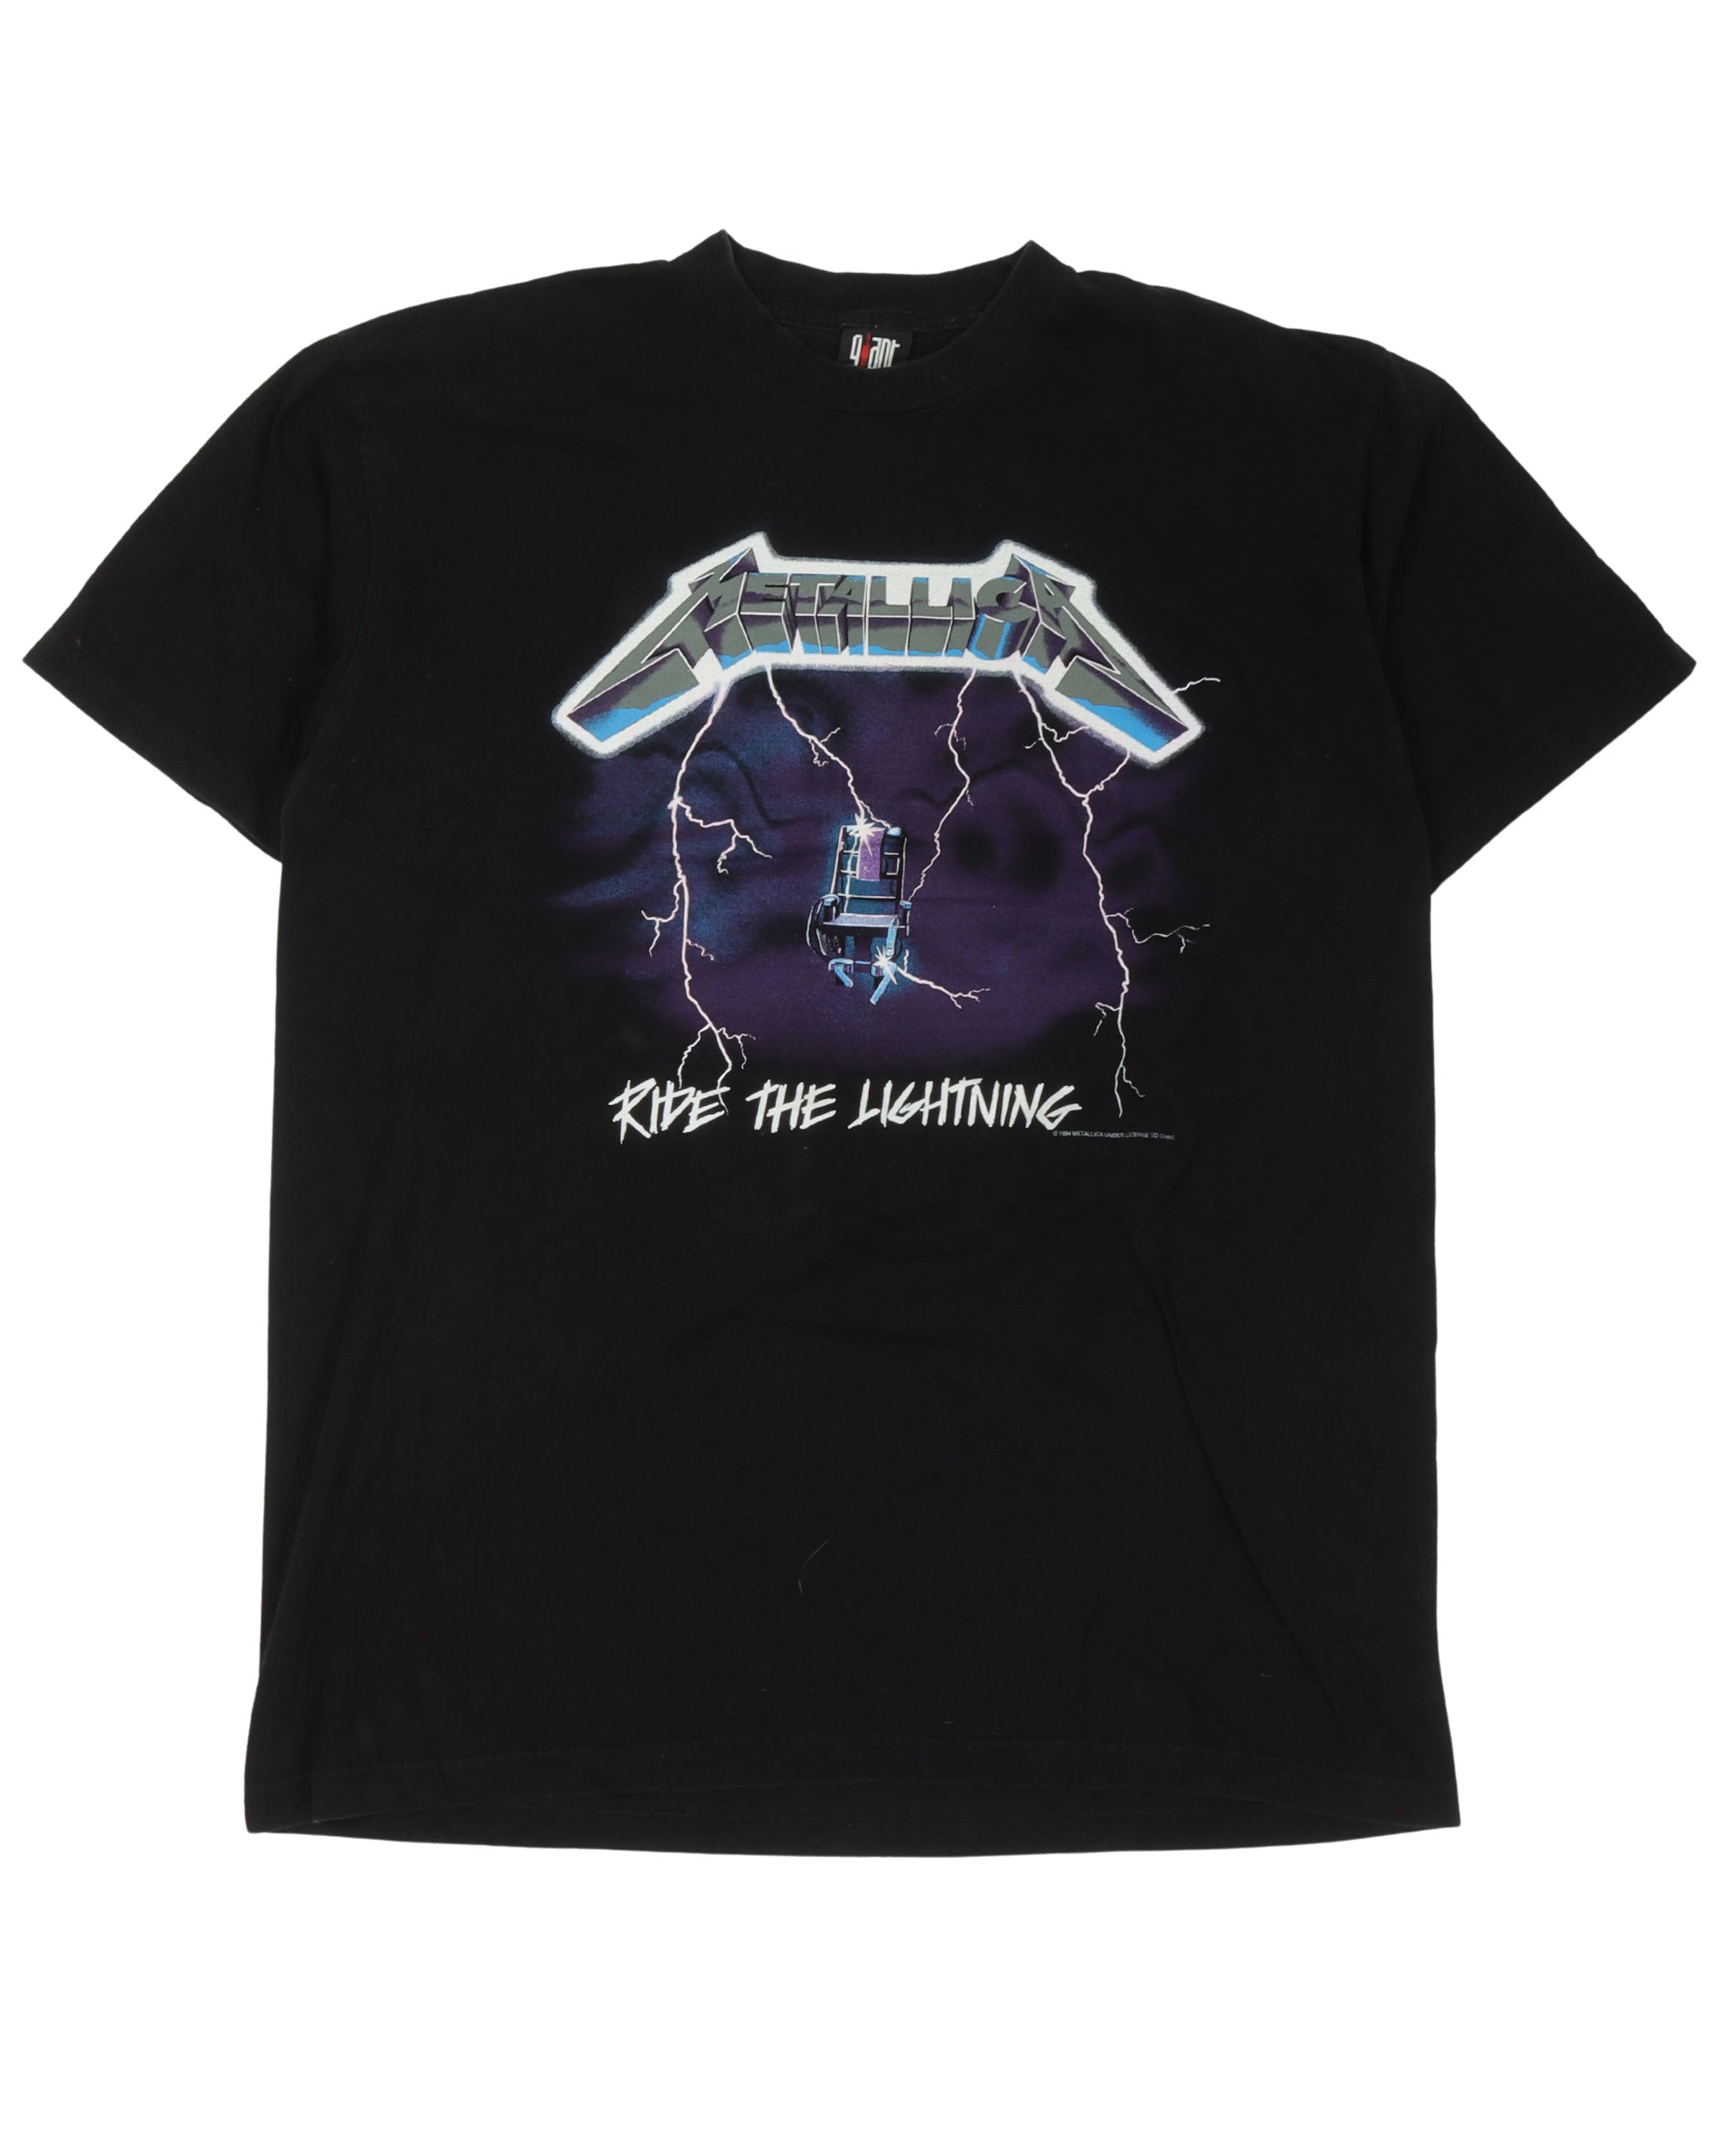 Vintage Rare Metallica Ride the Lightning Sweatshirt Size L 